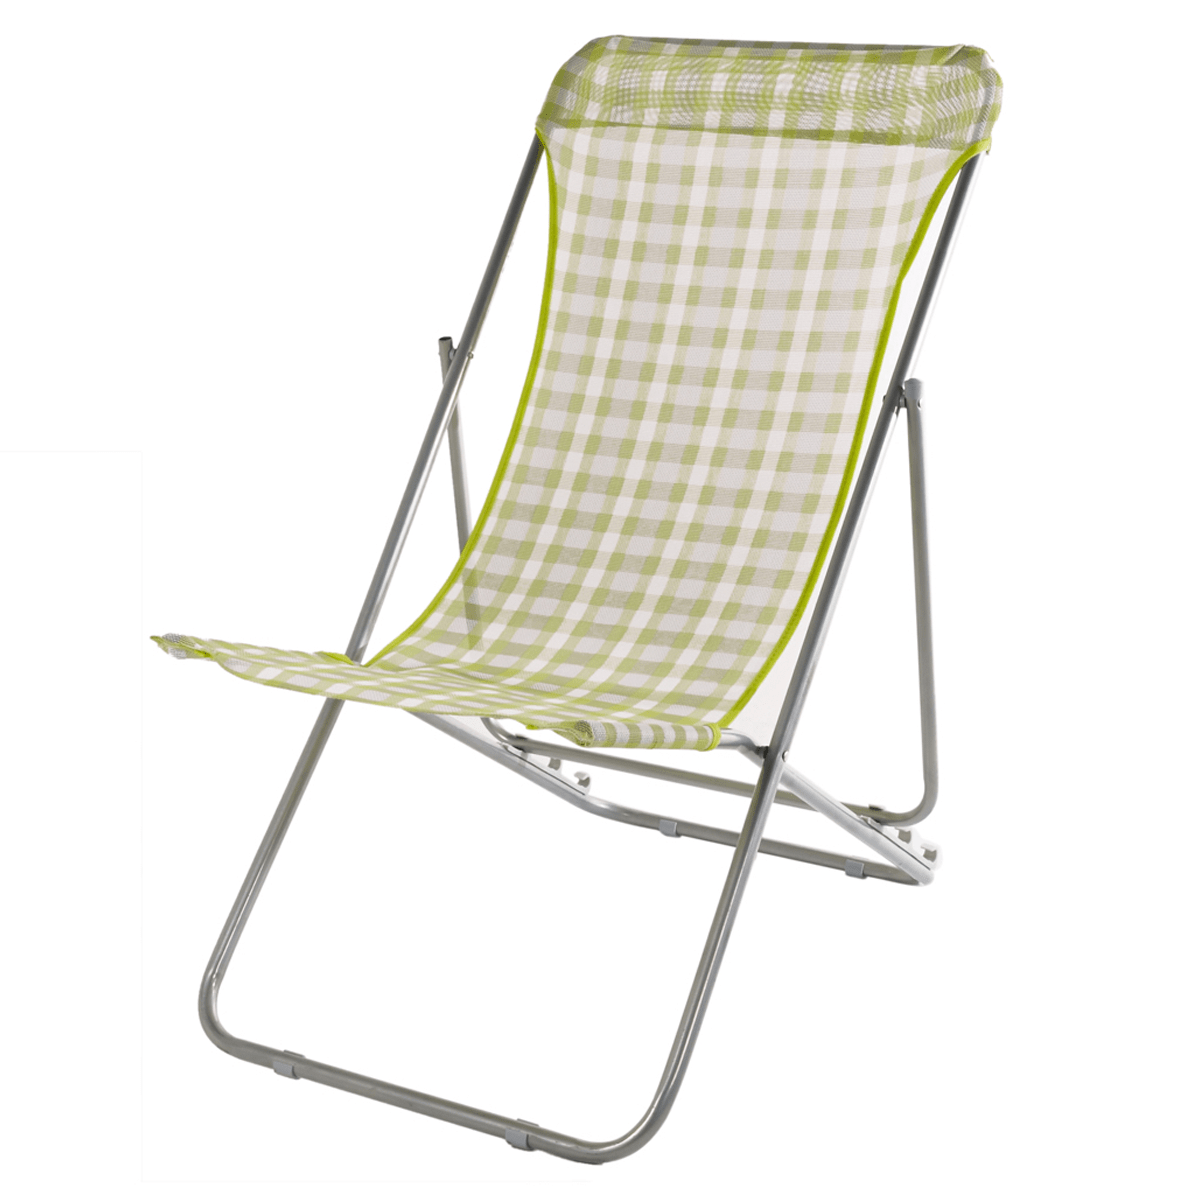 Folding Chair in Lime Green 67.5 x 42 x 22cm - SquareDubai